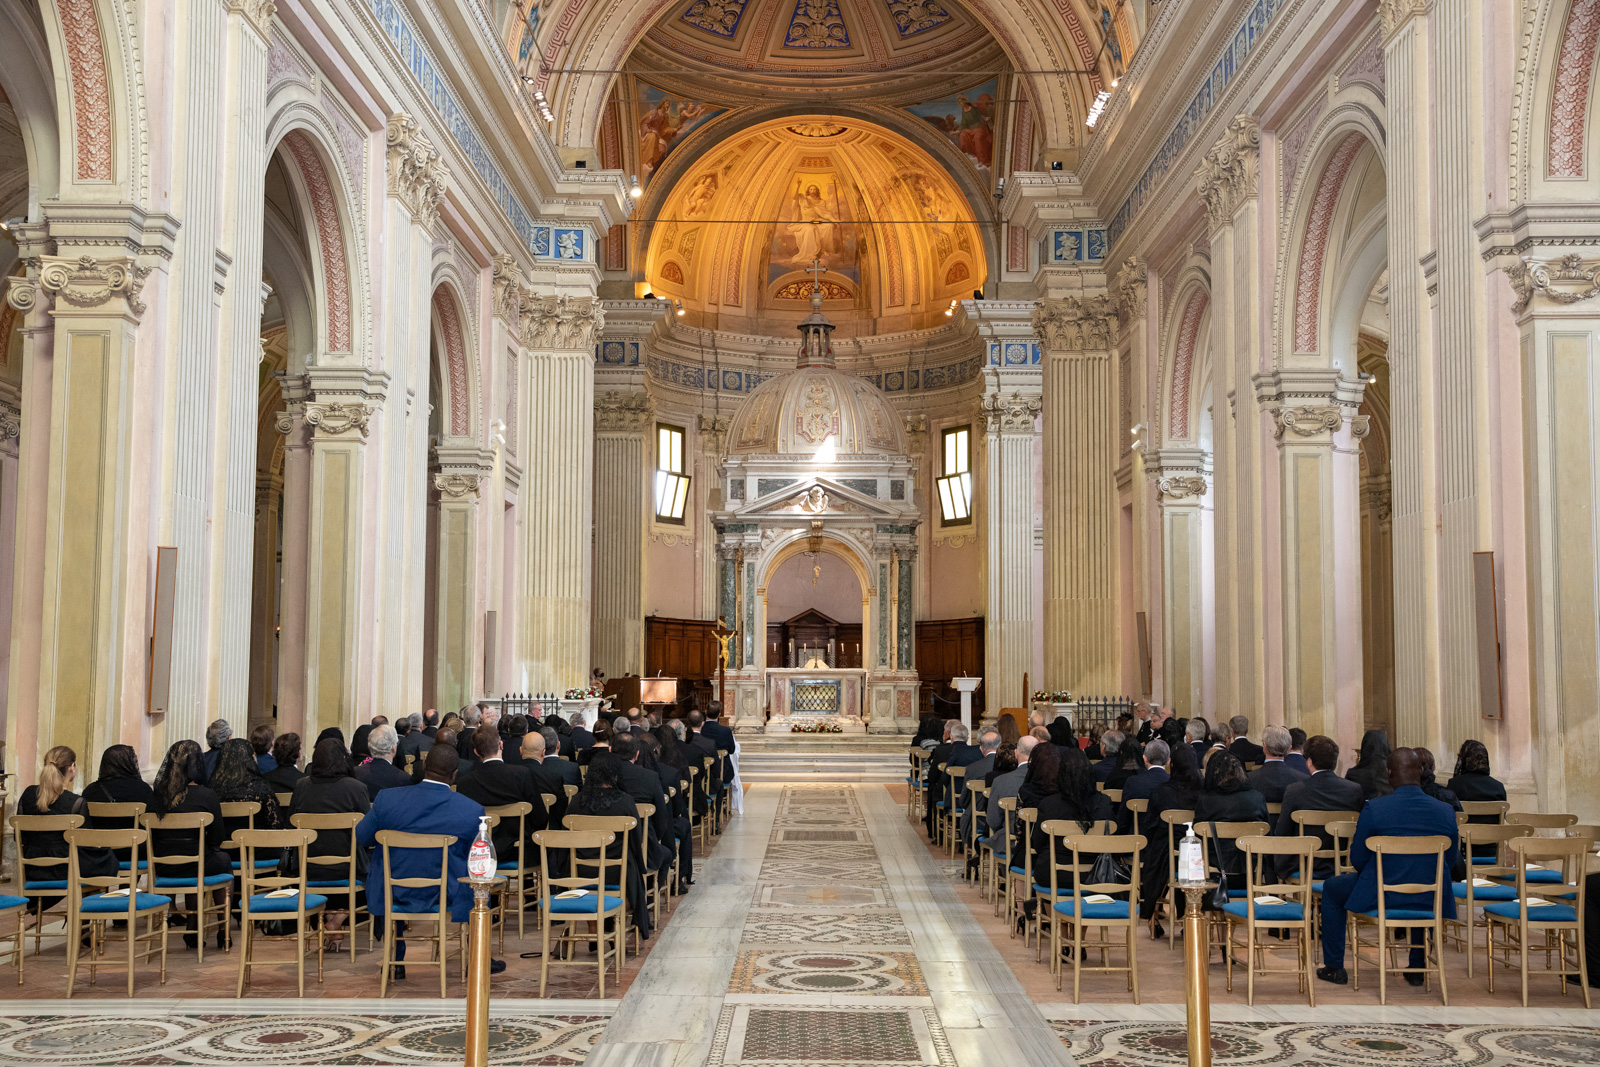 The Order of Malta celebrates St John the Baptist around the world